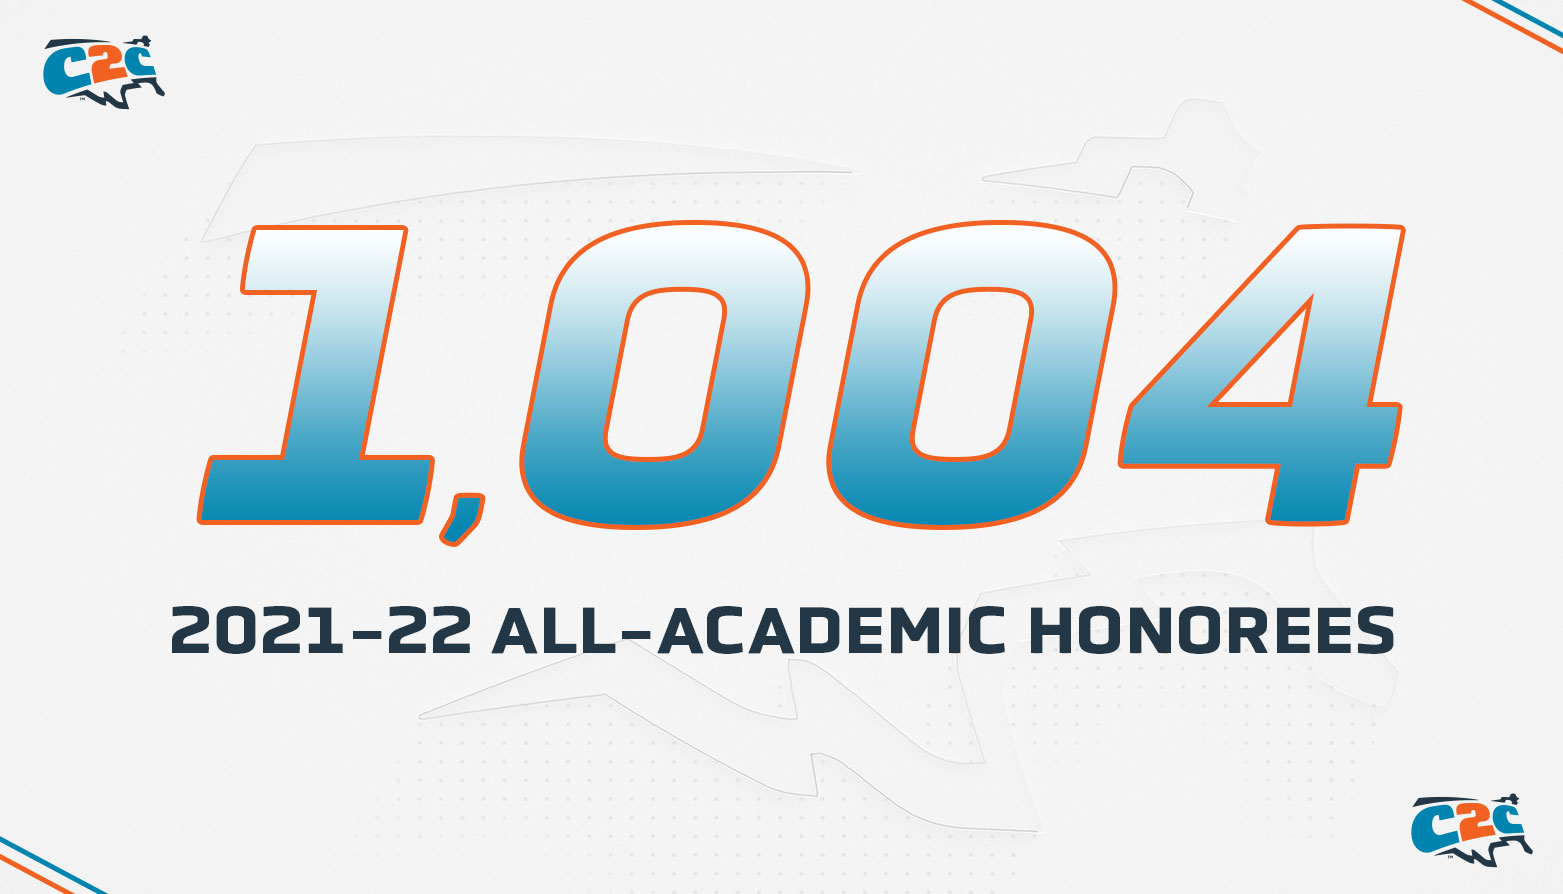 C2C Honors 1,004 Student-Athletes on 2021-22 All-Academic Team